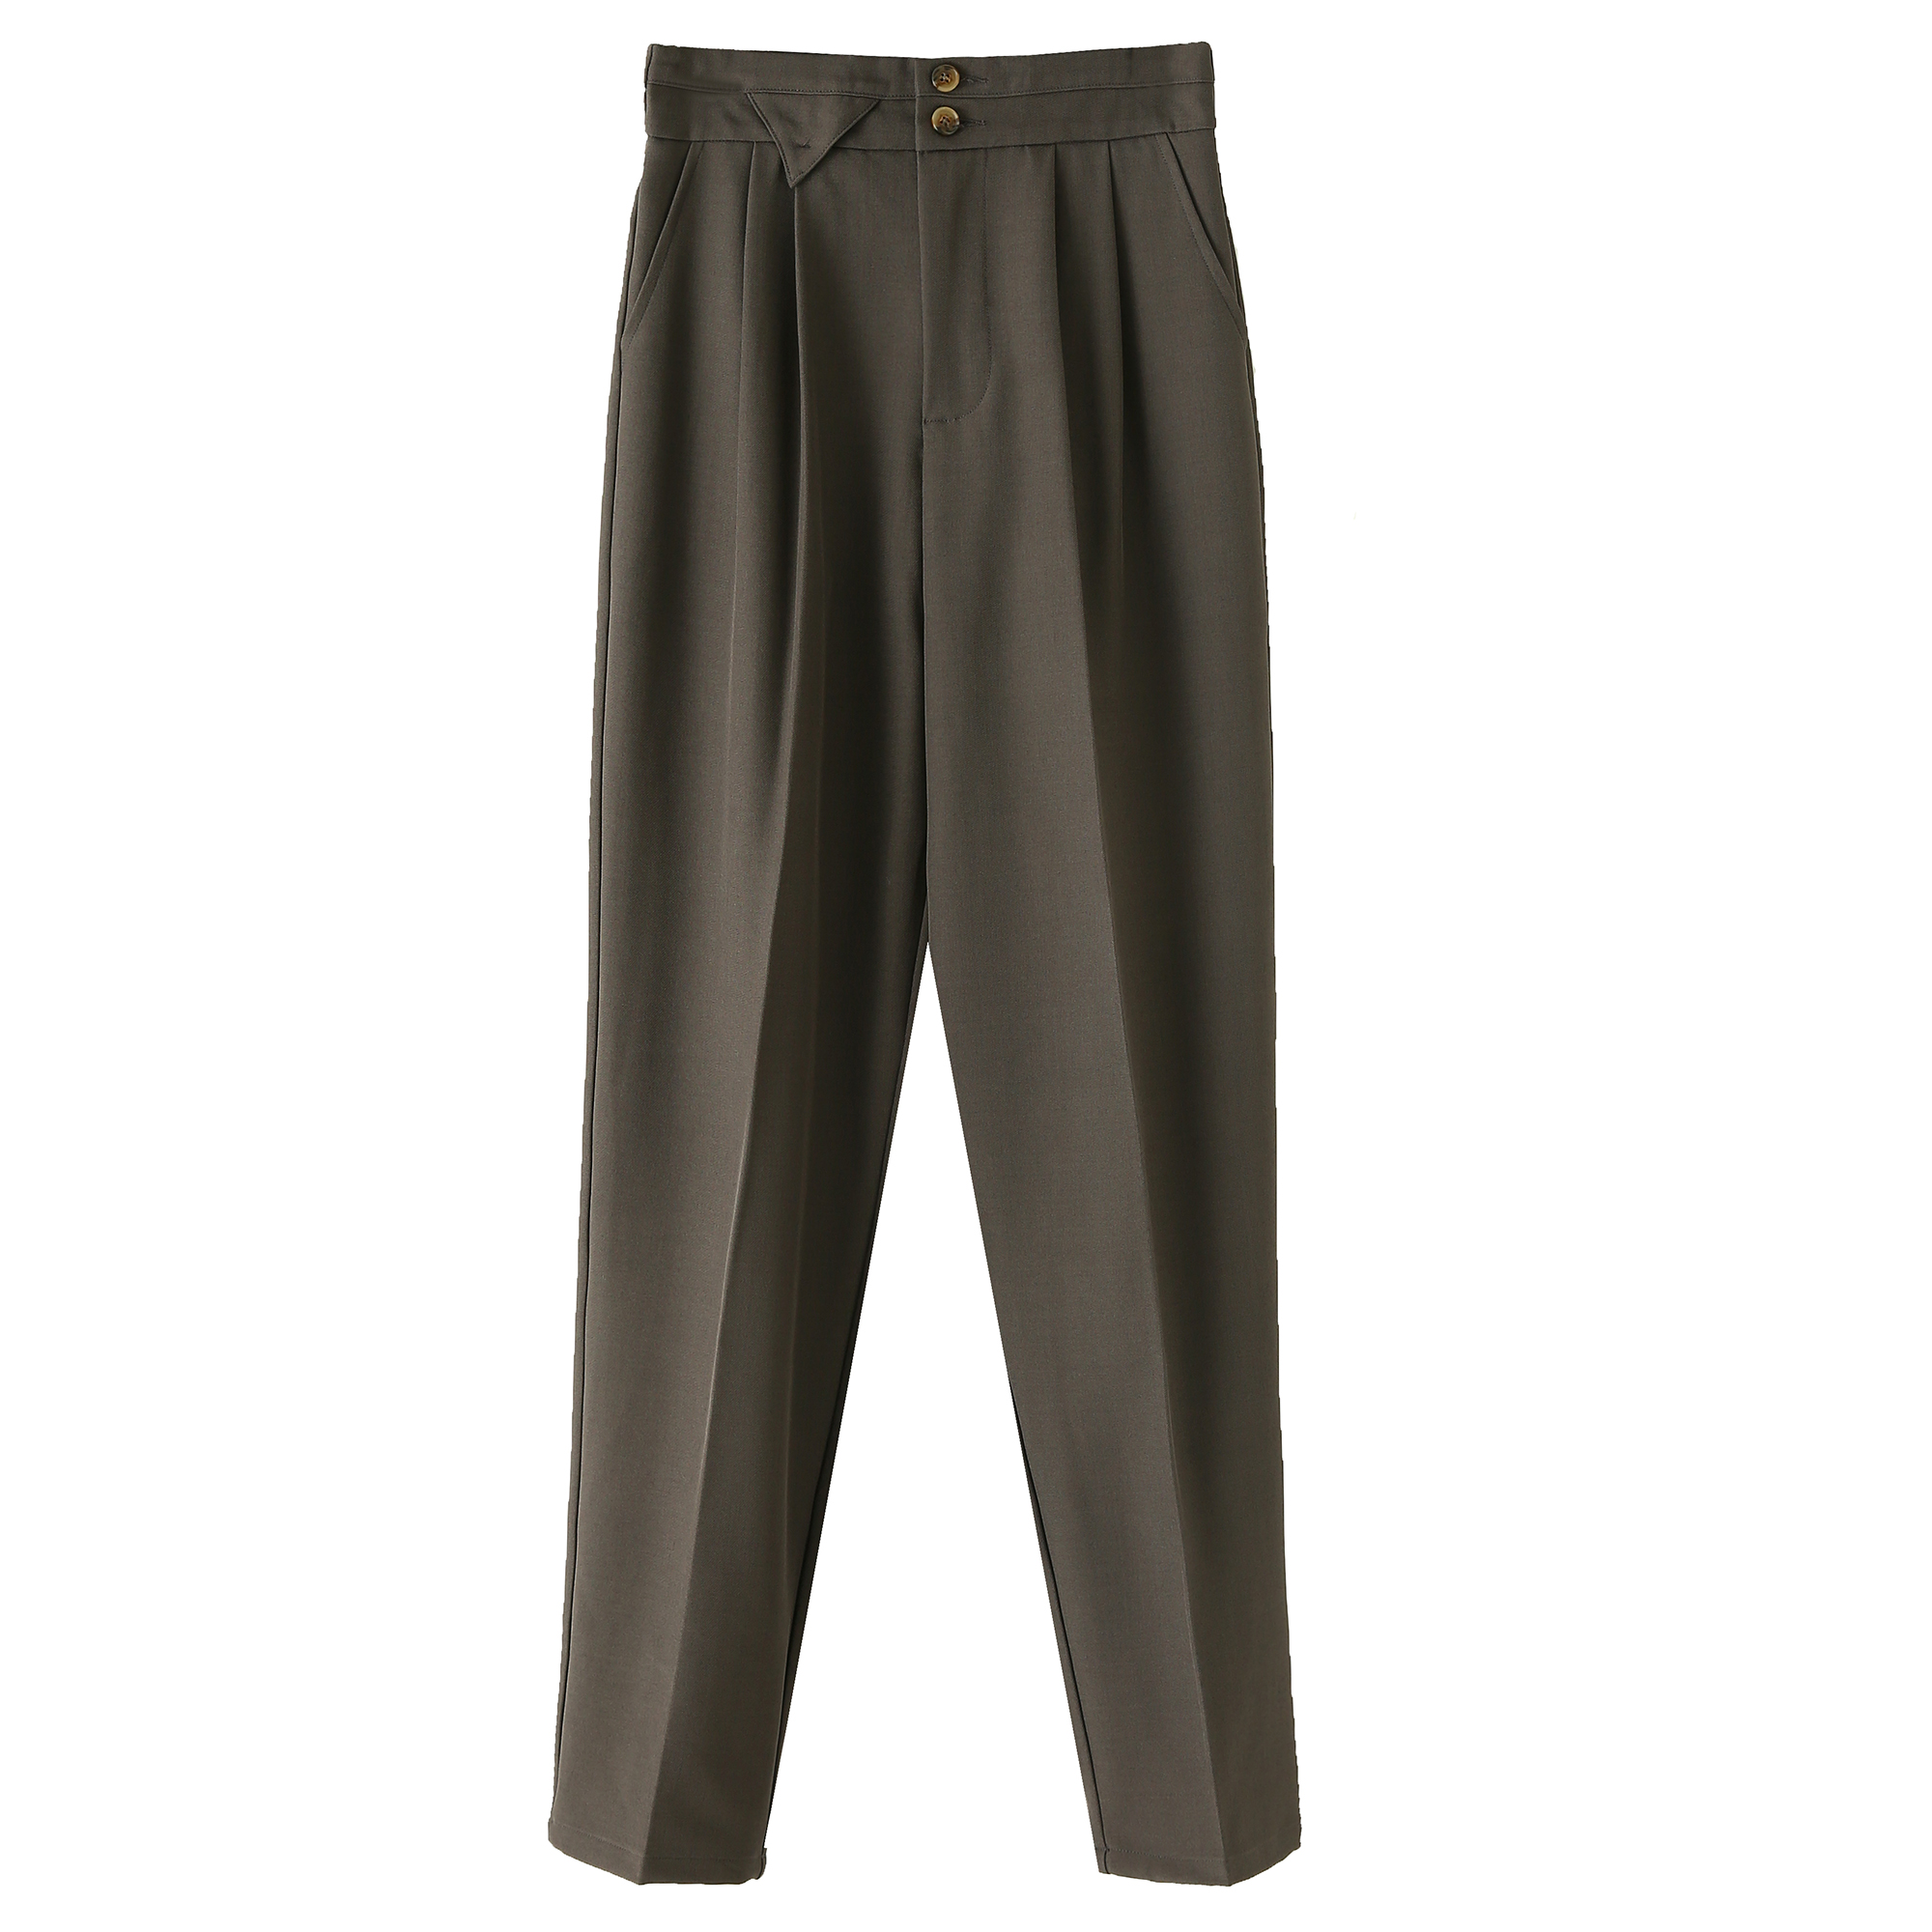 7495 real shot ~ large size design sense OL commuter trousers for women high waist versatile slimming small straight cigarette pants